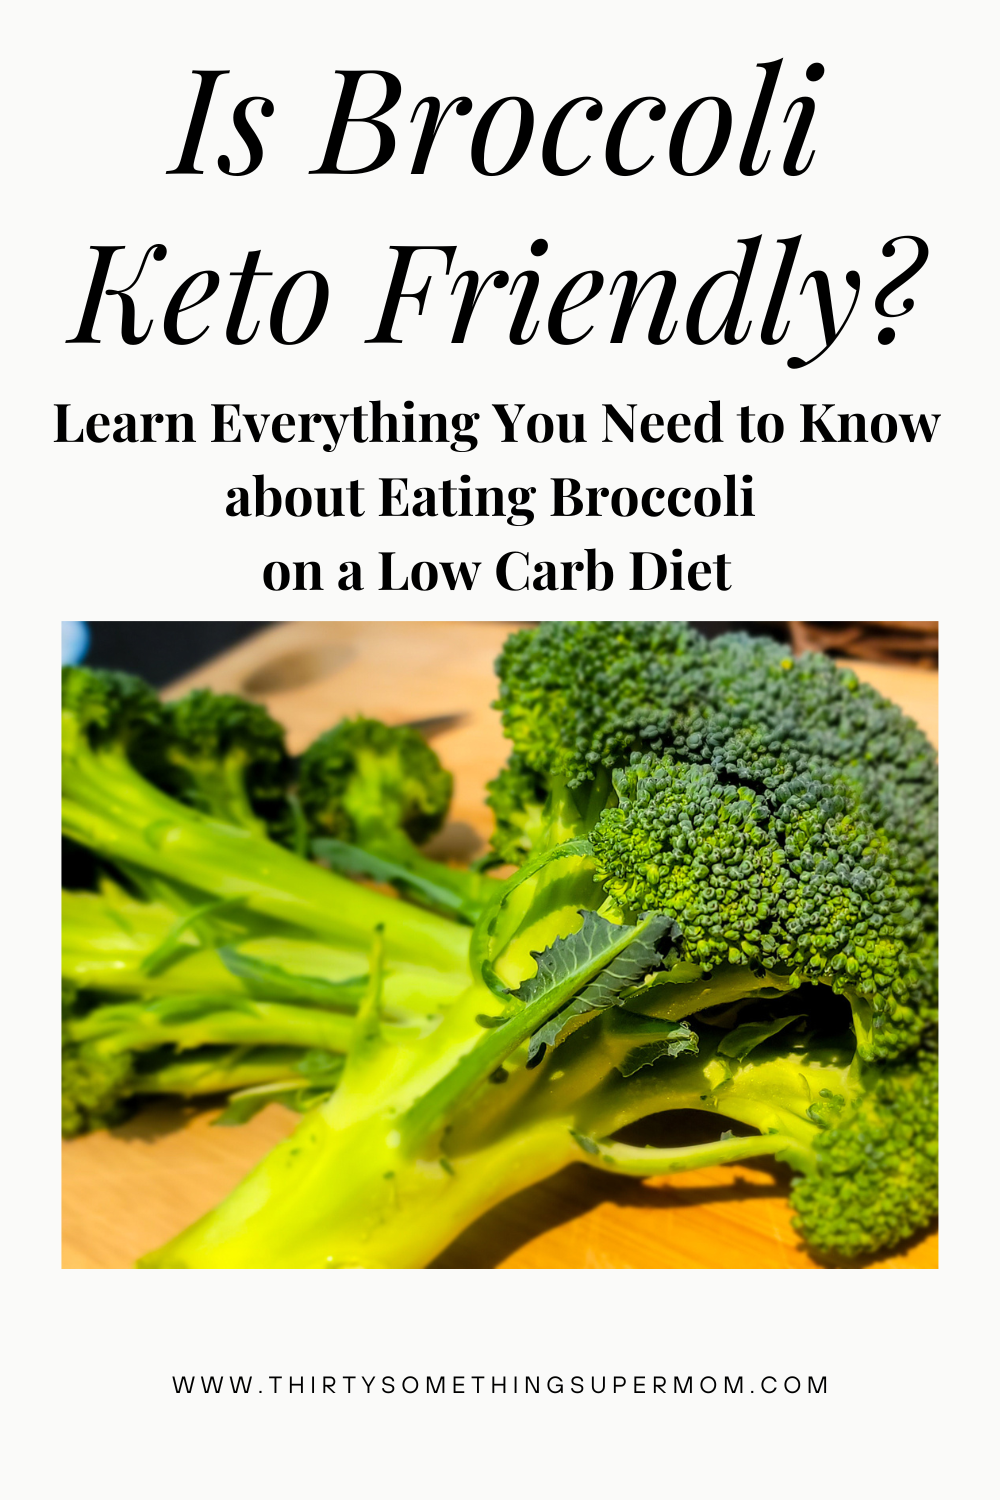 Is Broccoli Keto Friendly?